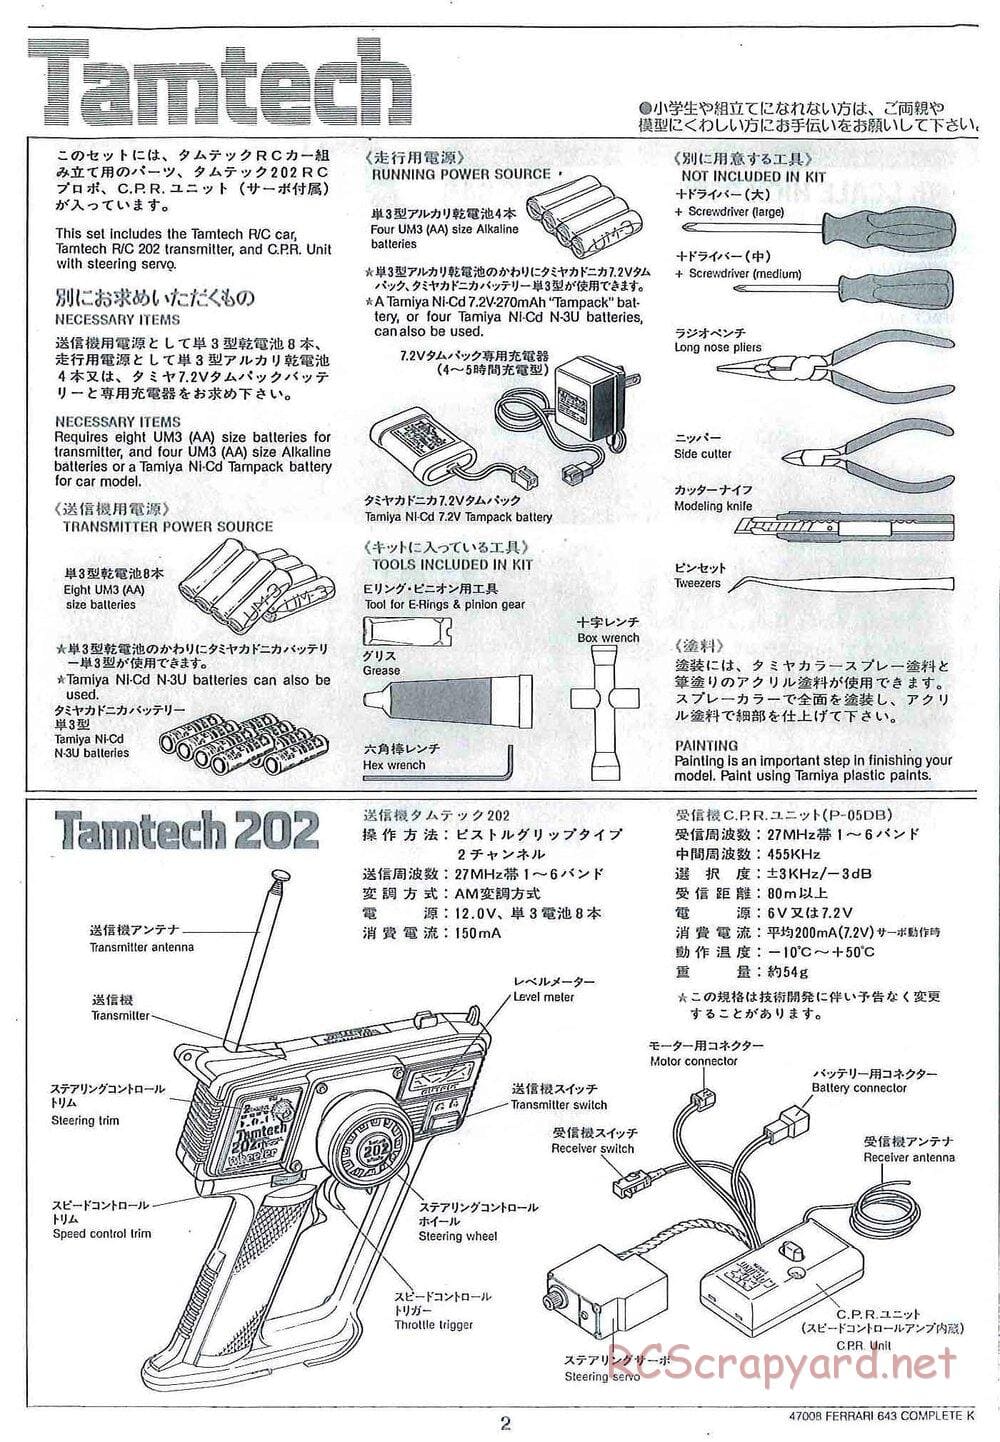 Tamiya - Tamtech - Ferrari 643 Chassis - Manual - Page 2